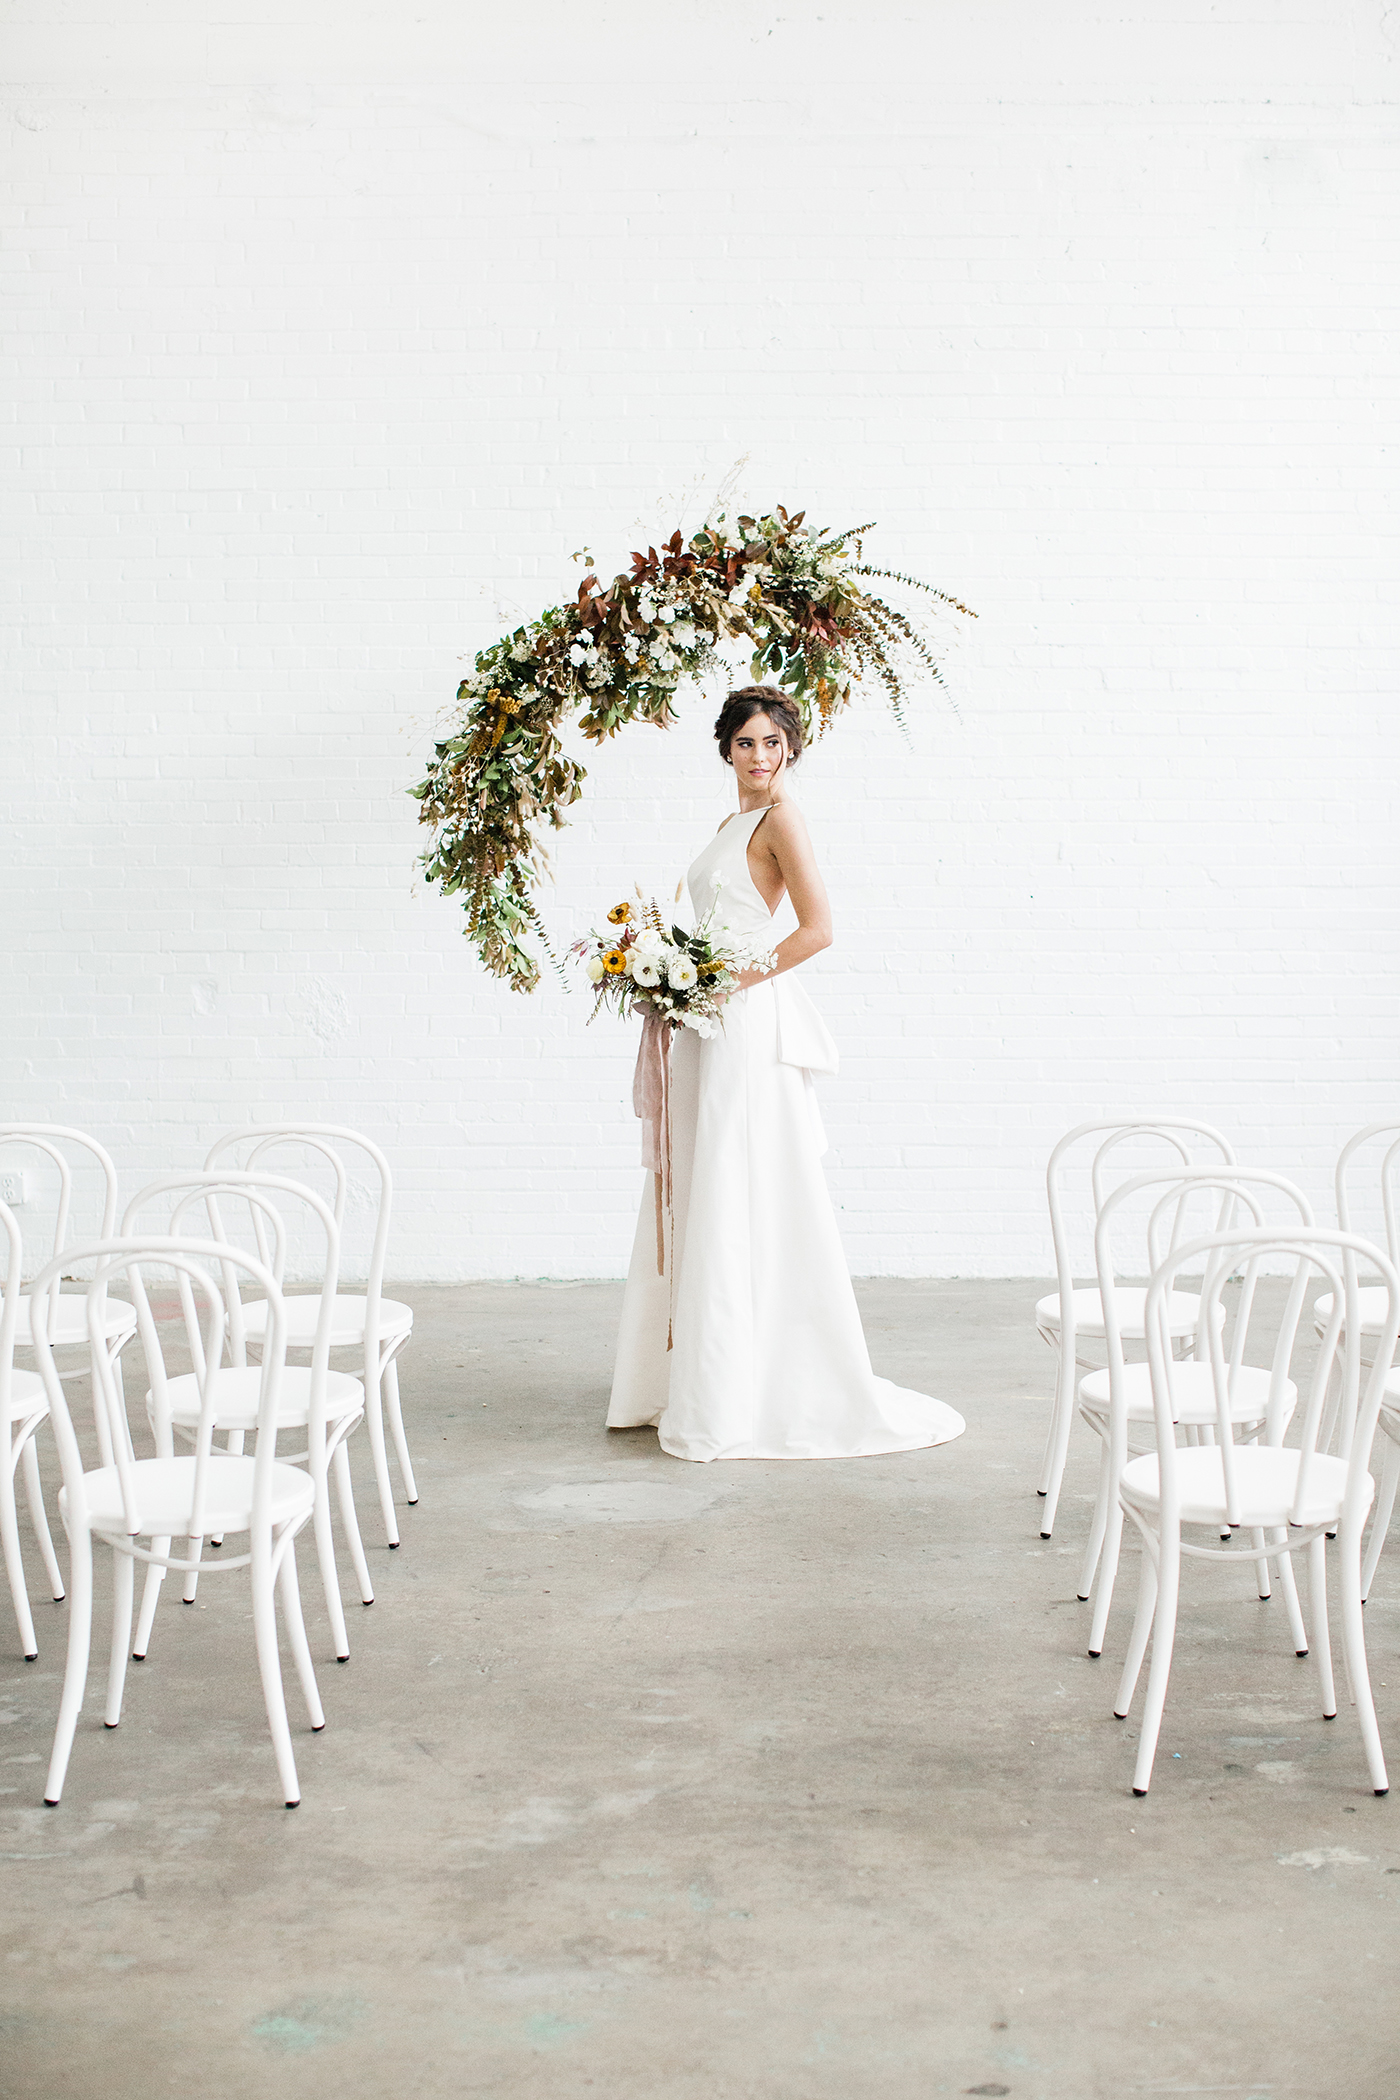 Wedding Floral Design Dallas - Olive Grove Design - Mimimalist Fall Wedding - 00033.jpg